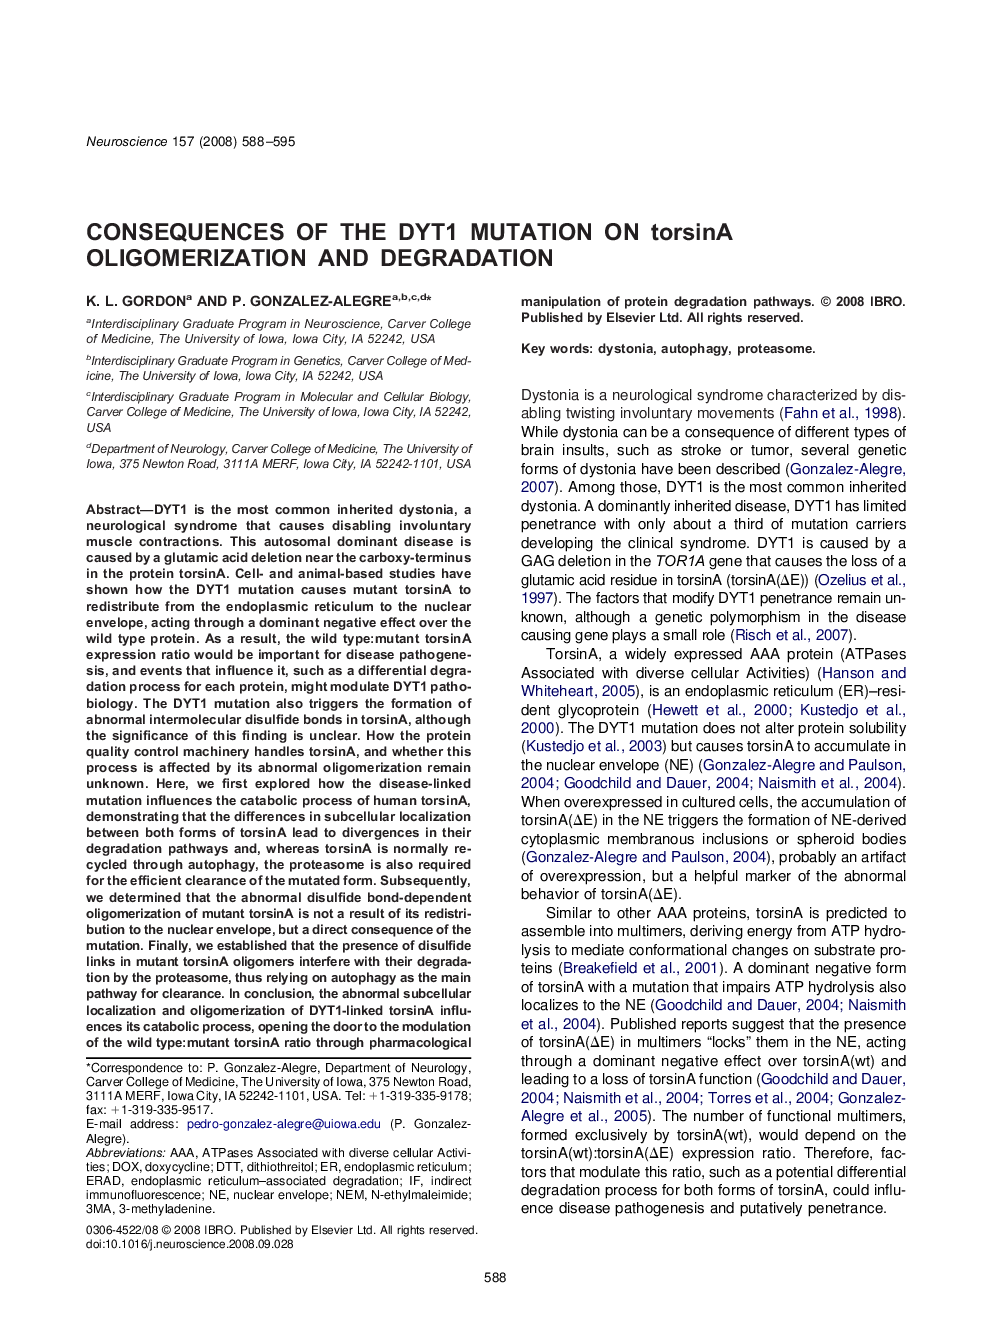 Consequences of the DYT1 mutation on torsinA oligomerization and degradation